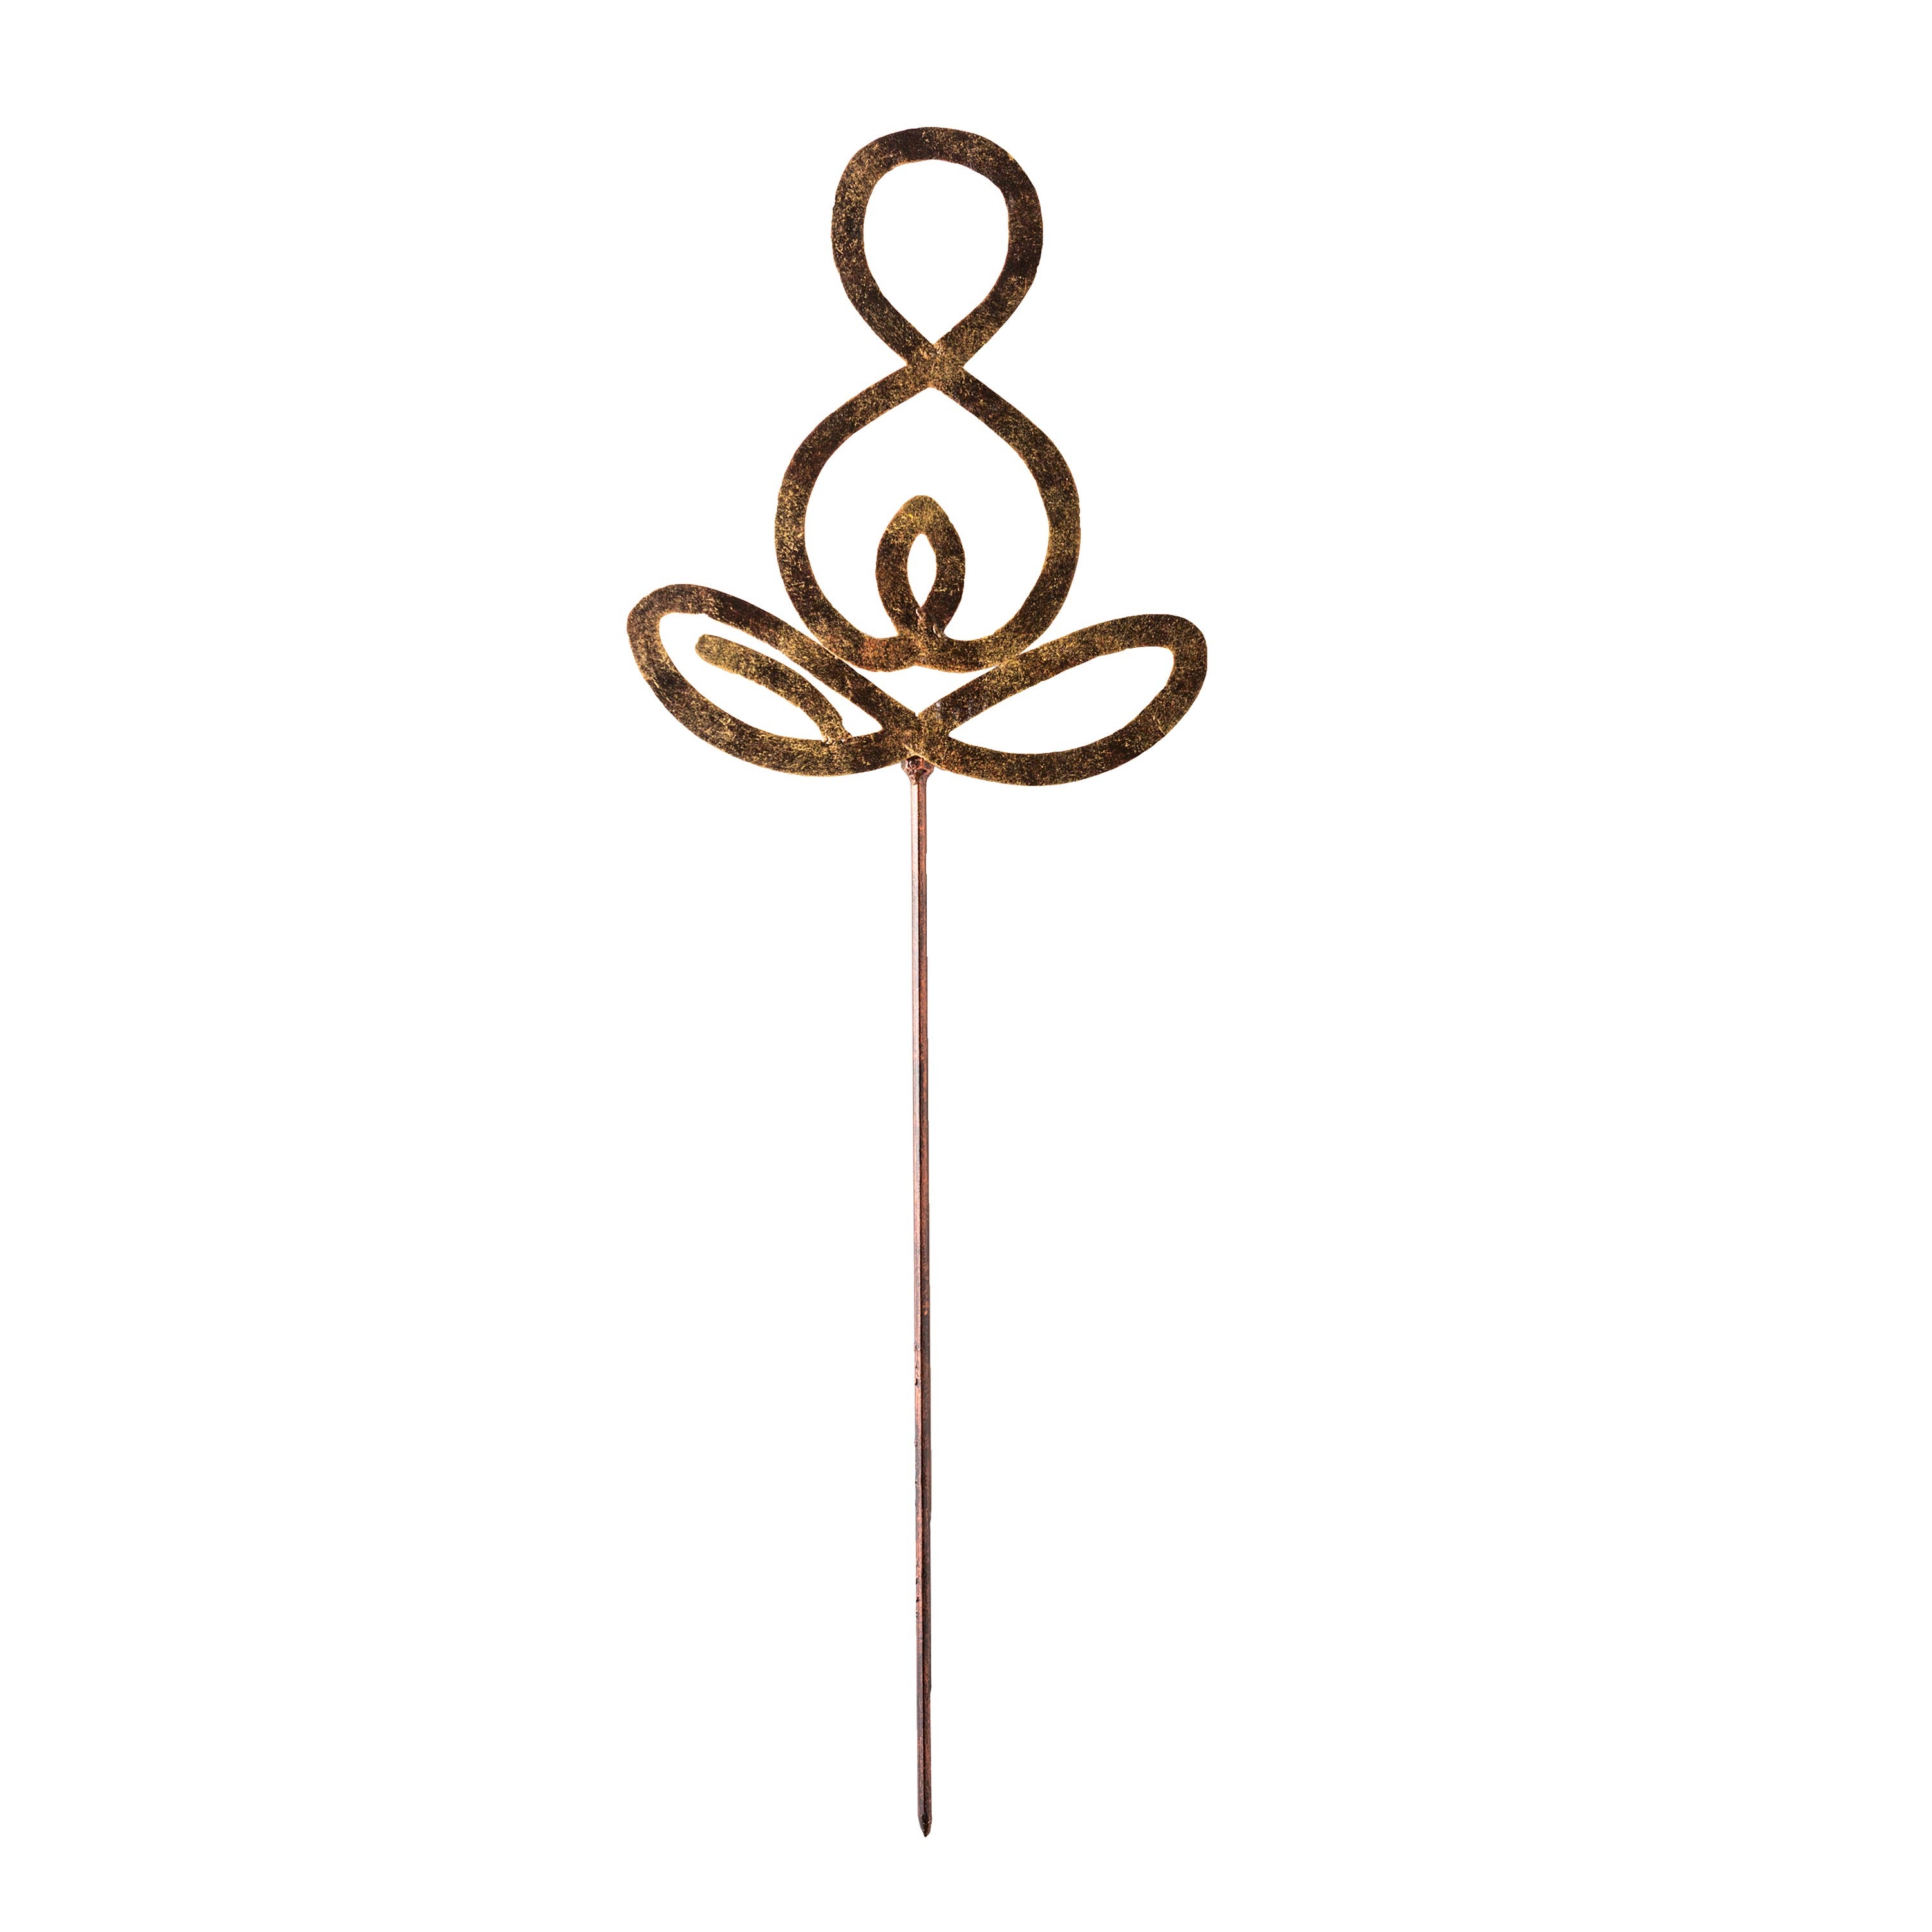 Zen Symbols Garden Stakes swatch image